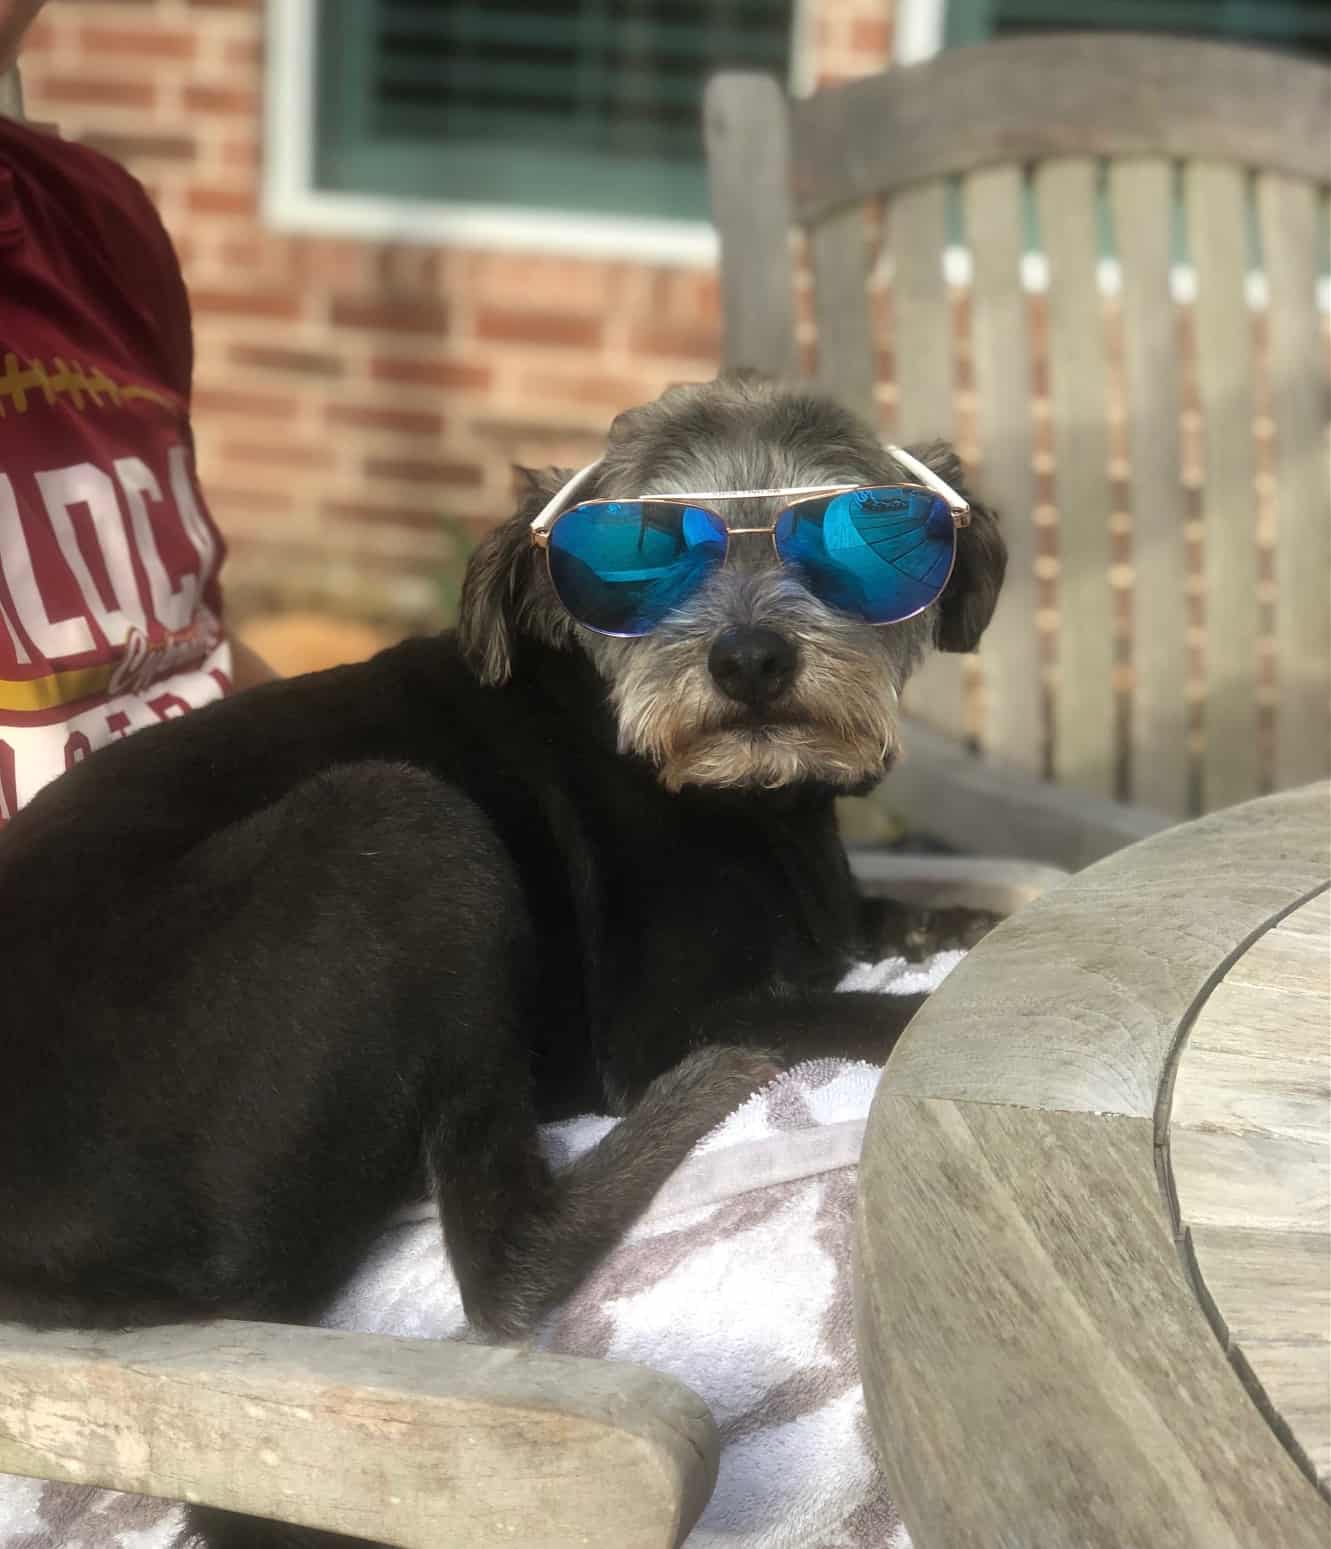 Linley's dog wearing sunglasses.